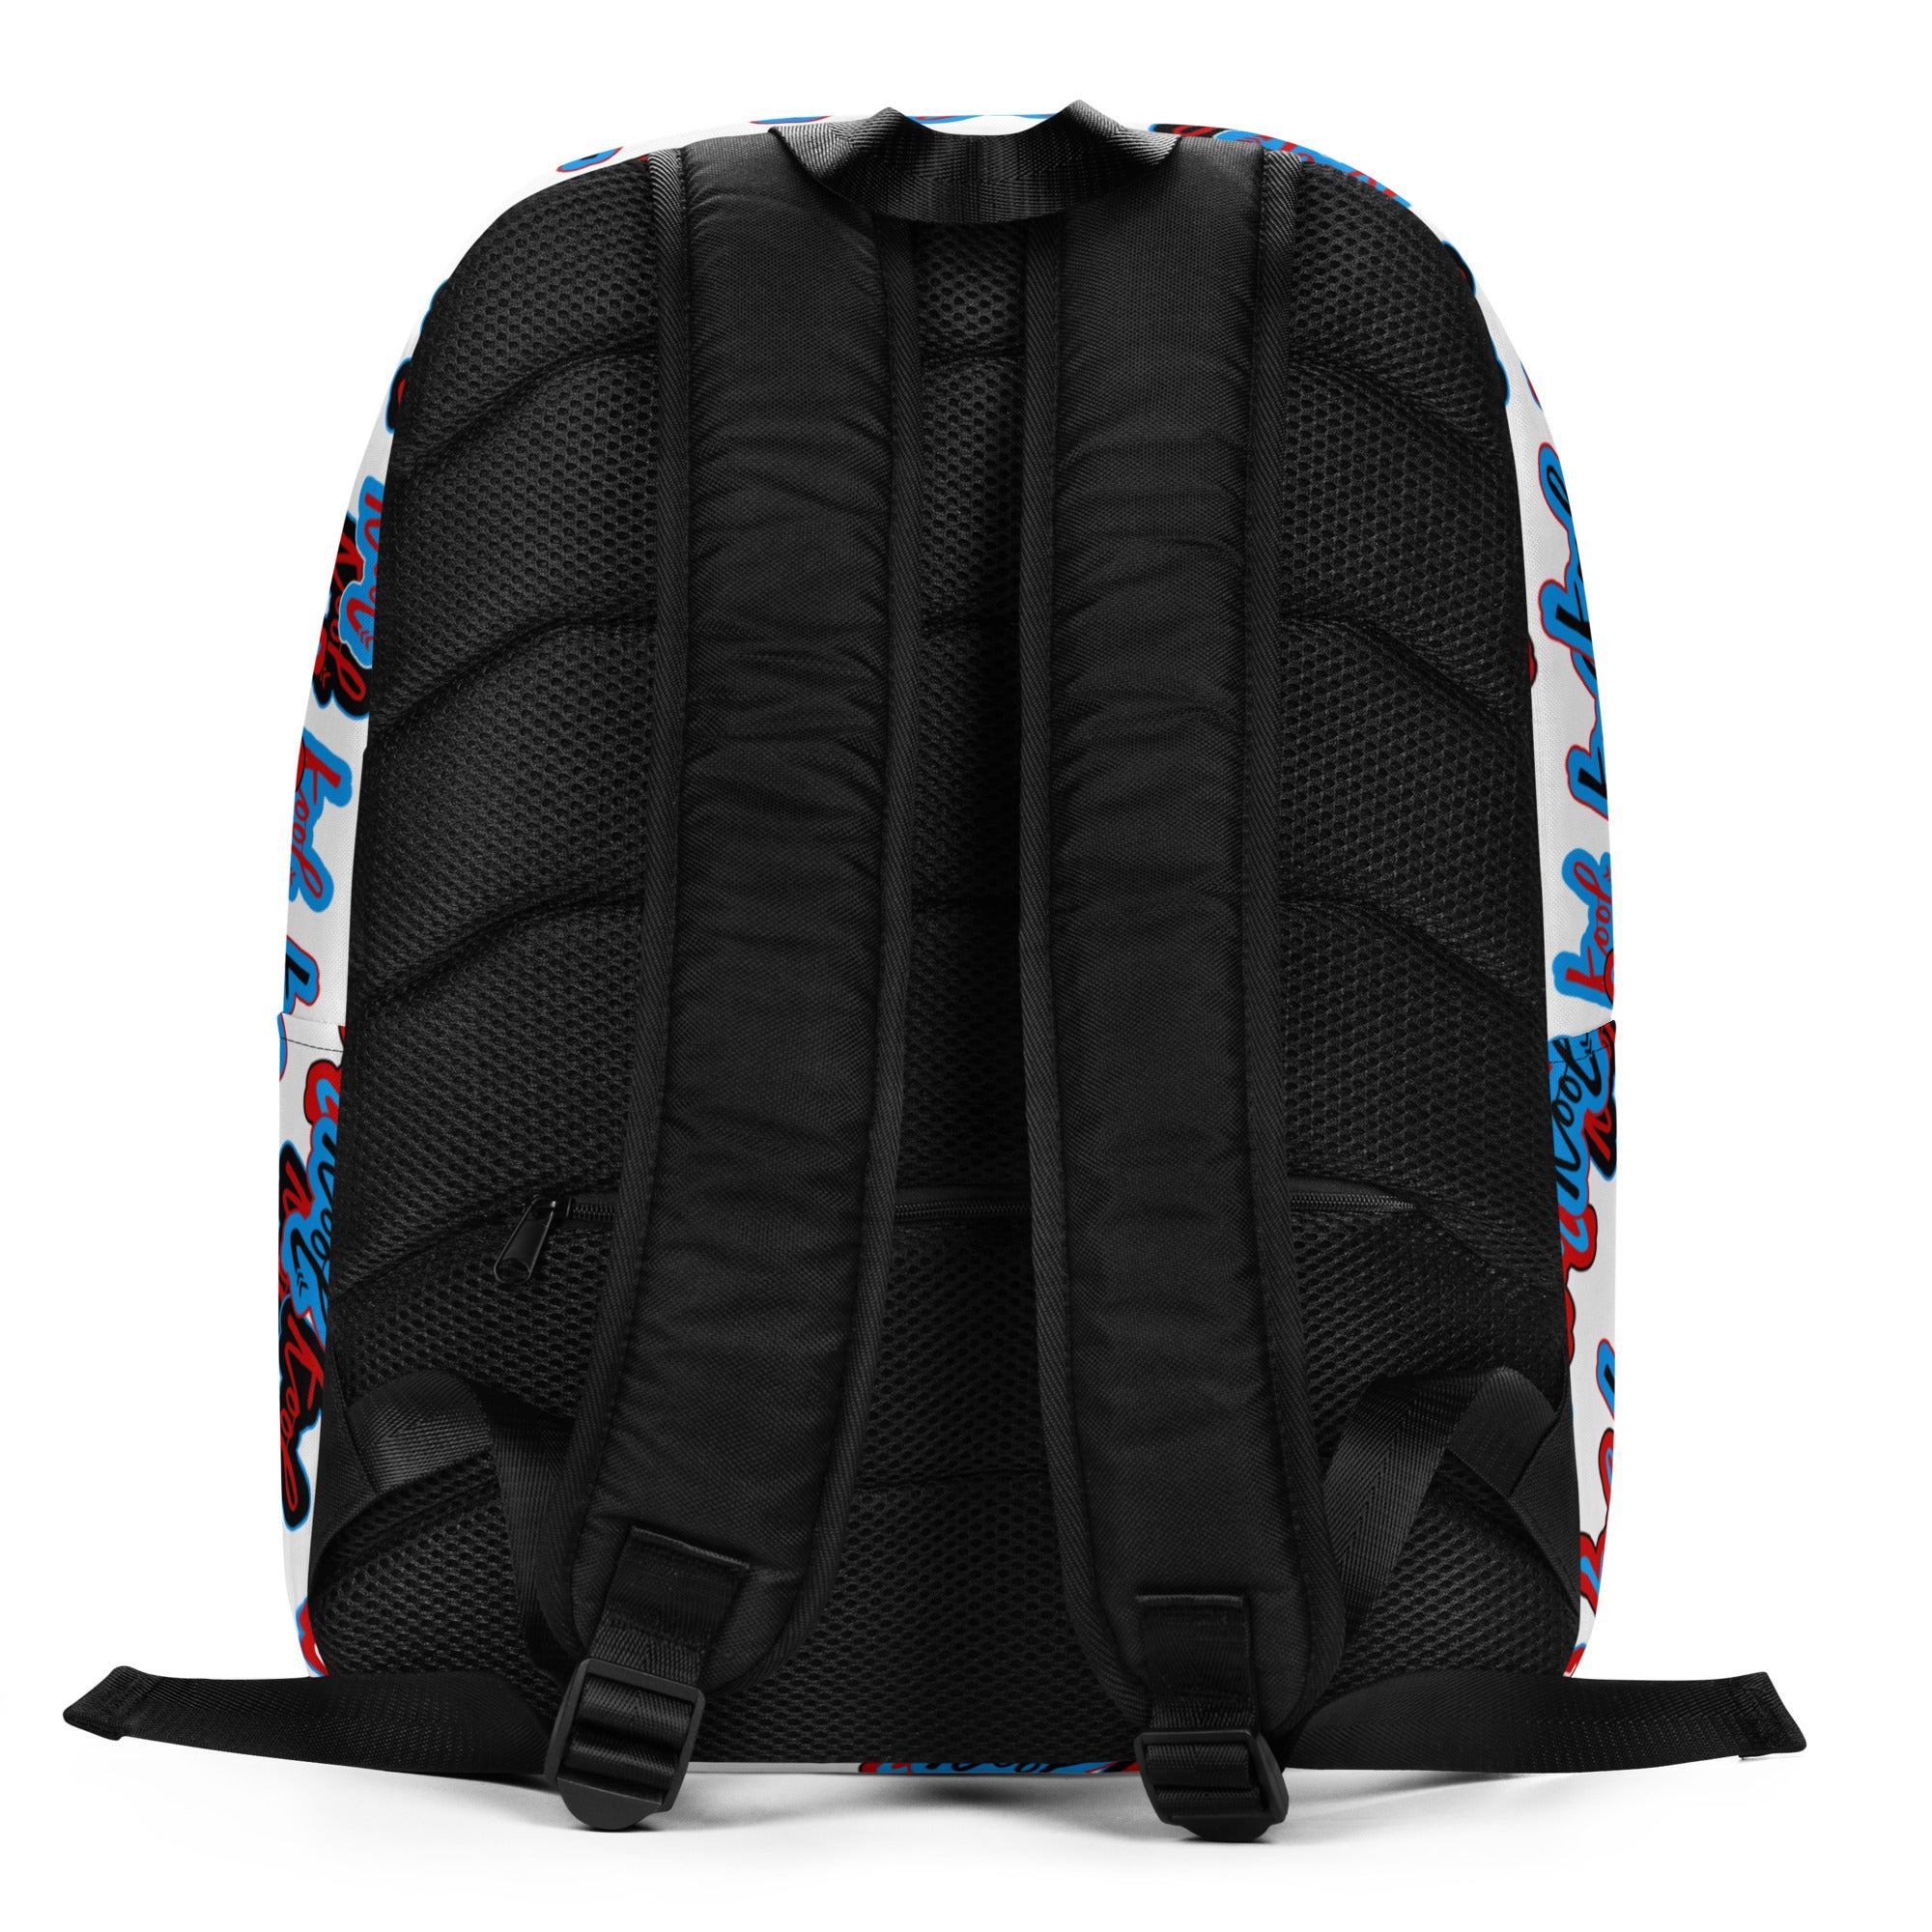 KOOL Backpack